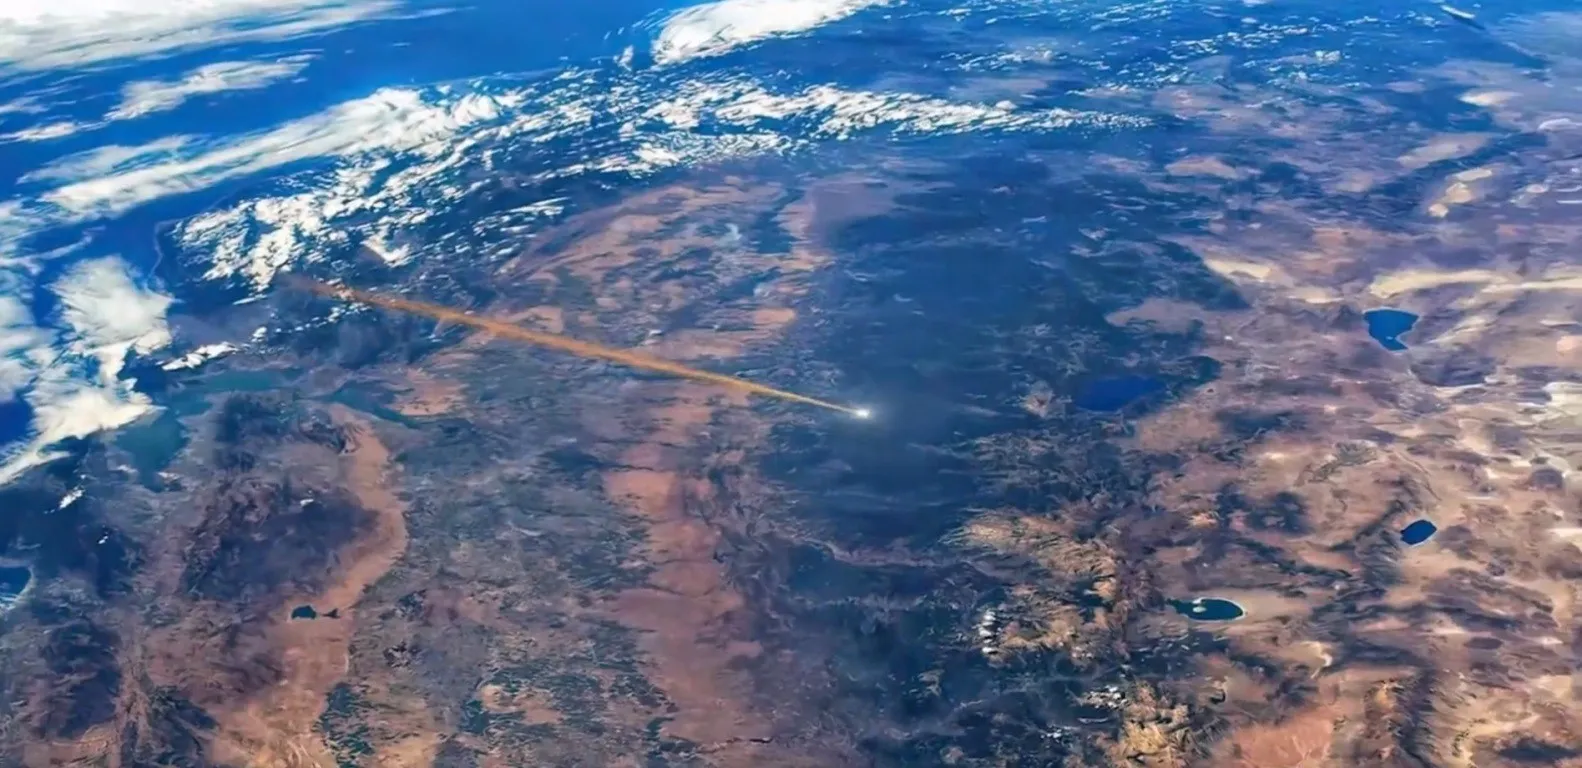 Live η φλεγόμενη επιστροφή στη Γη της διαστημικής κάψουλας της NASA – Μεταφέρει χώμα με απαντήσεις για τη γέννεση της Γης  (βίντεο)